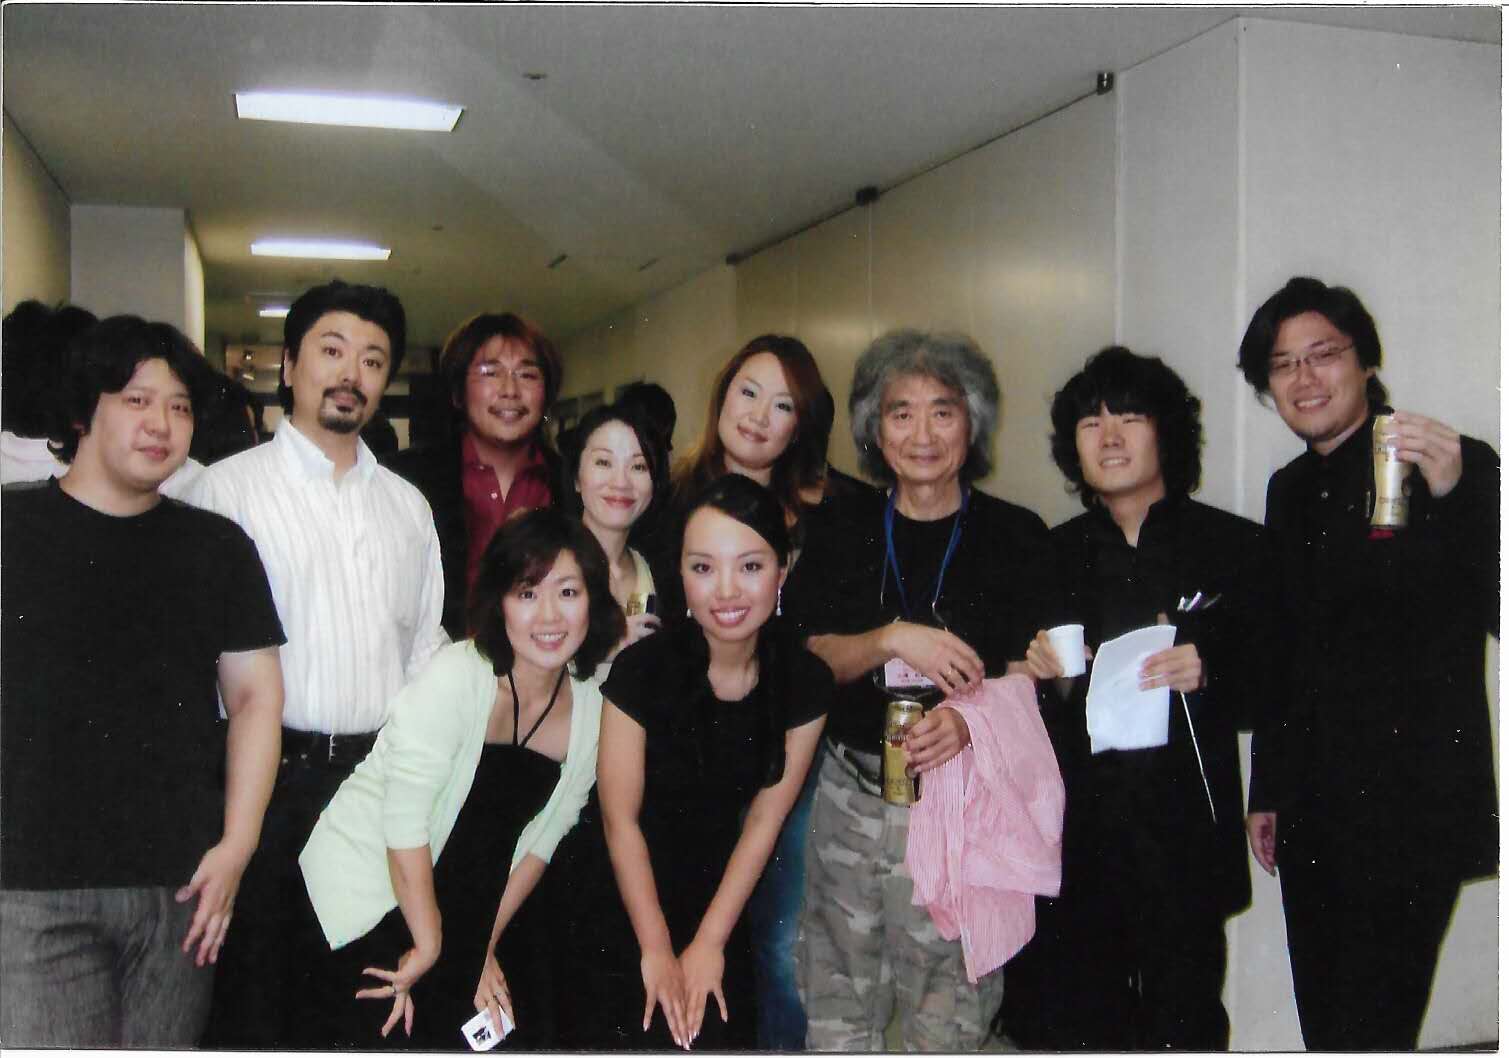 Photo taken at the Seiji Ozawa Music Academy with Seiji (third from the right). 